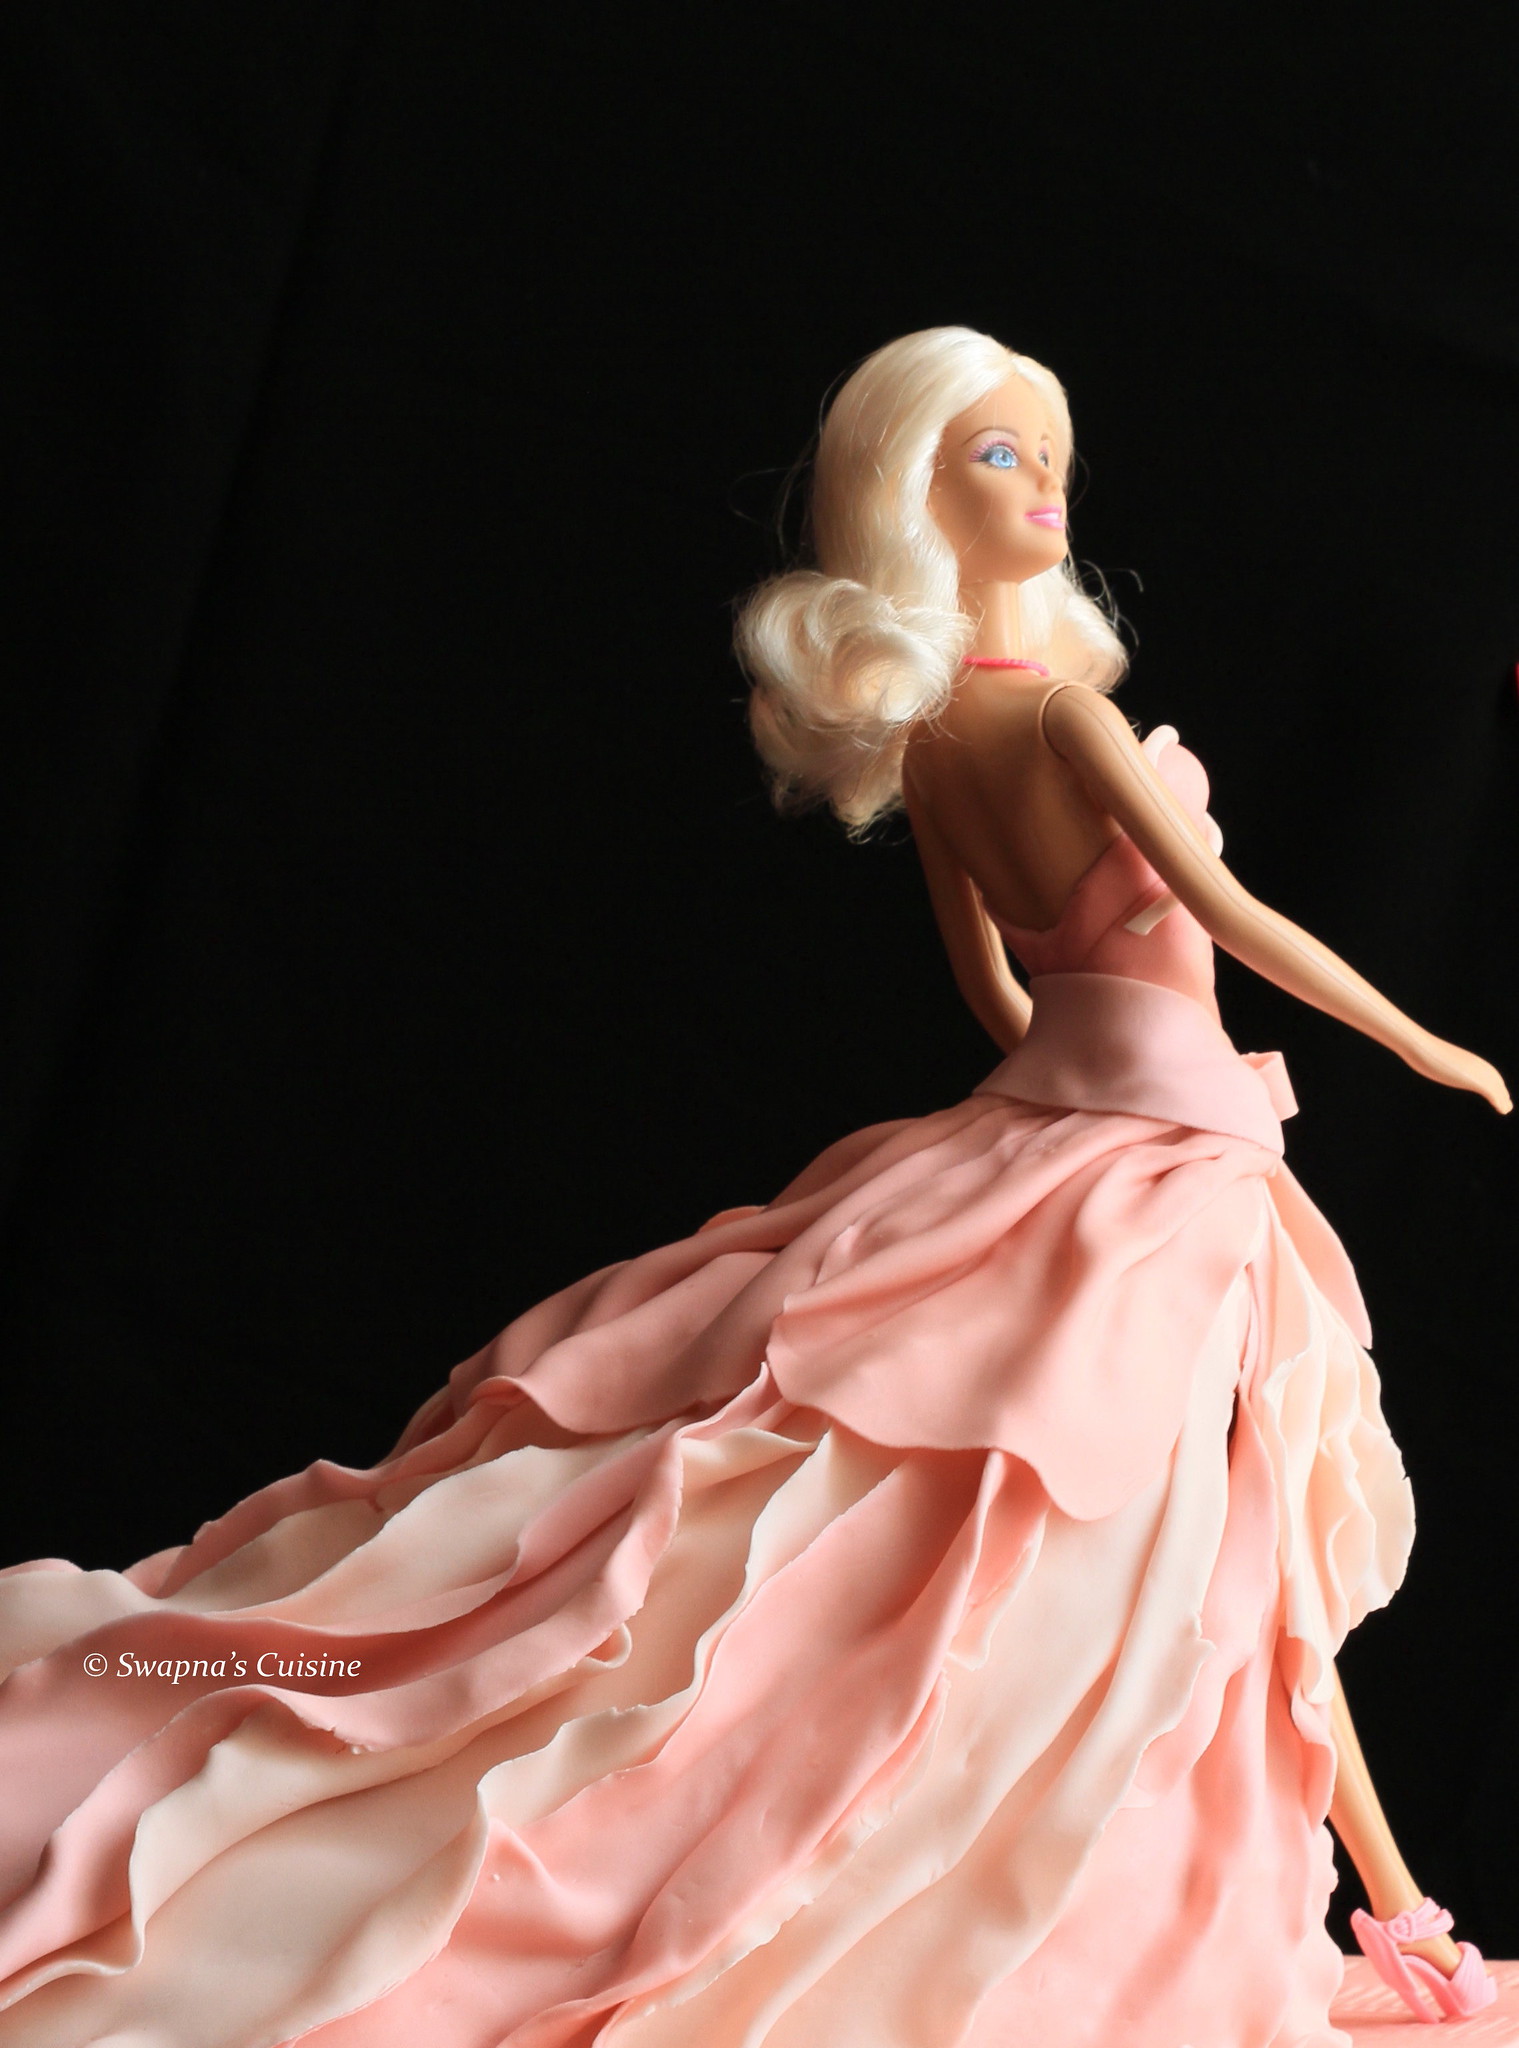 Barbie Doll cake with fondant